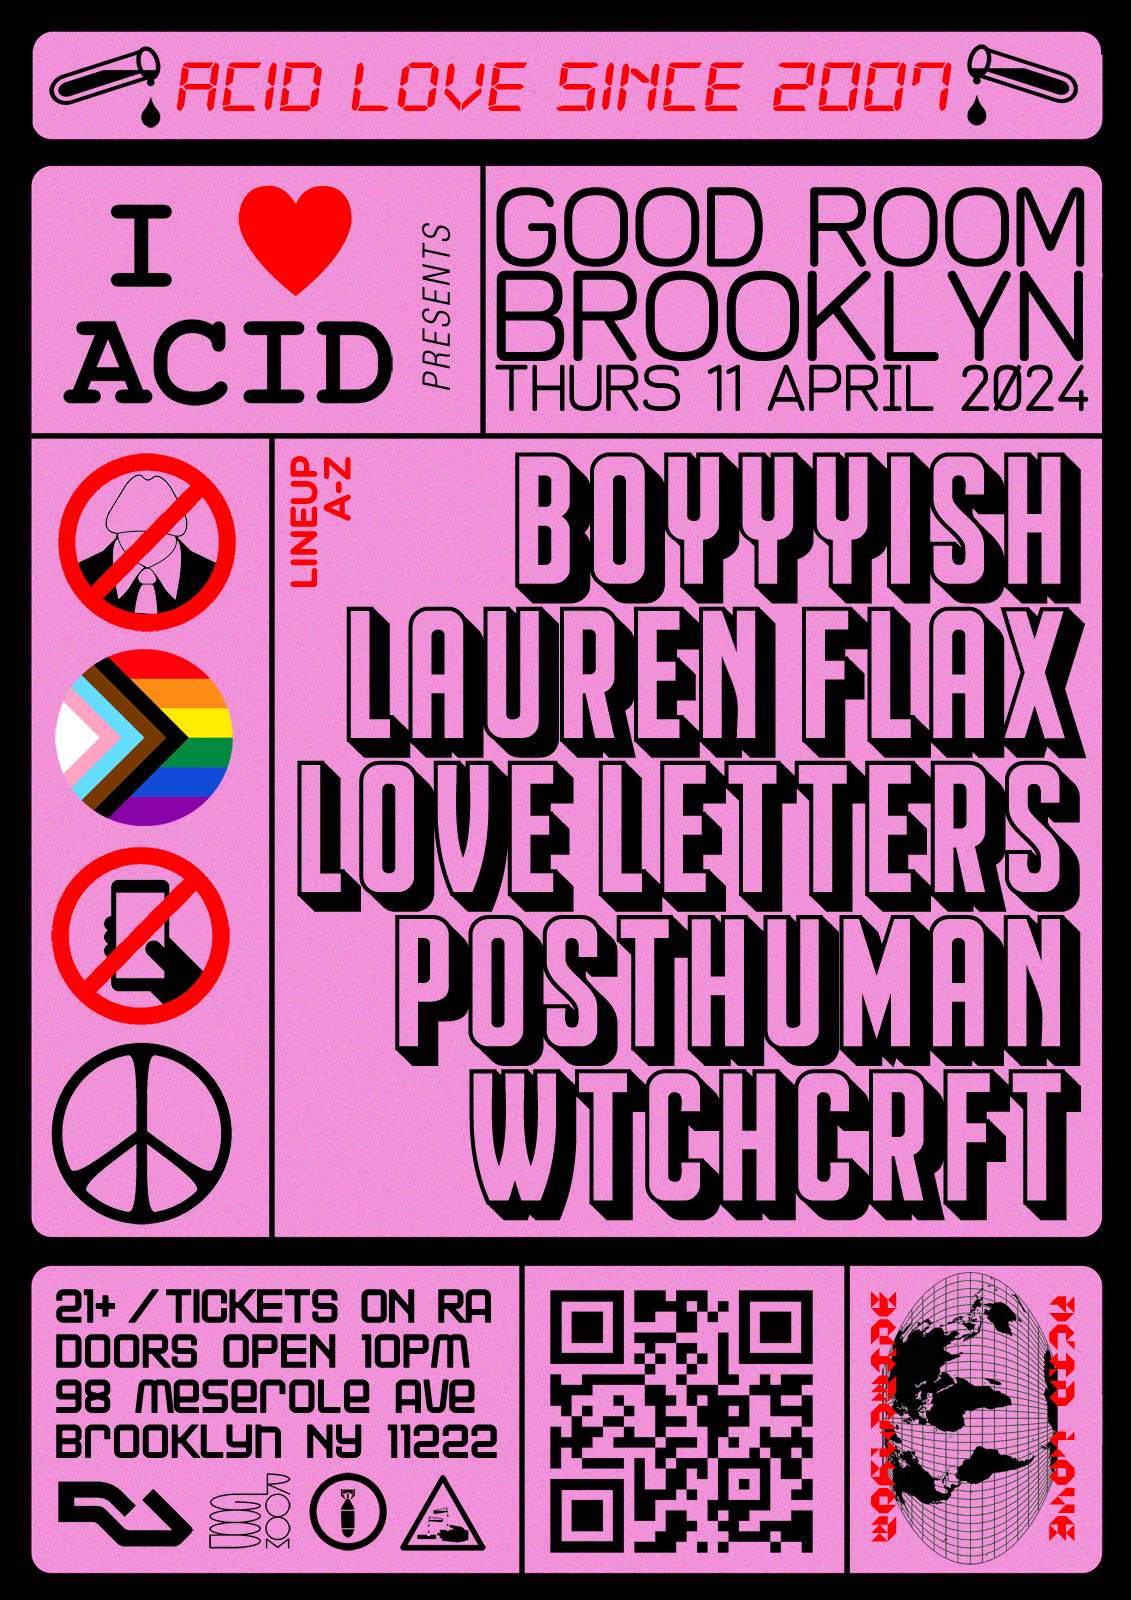 I Love Acid: boyyyish, Lauren Flax, Love Letters, Posthuman, WTCHCRFT - フライヤー表